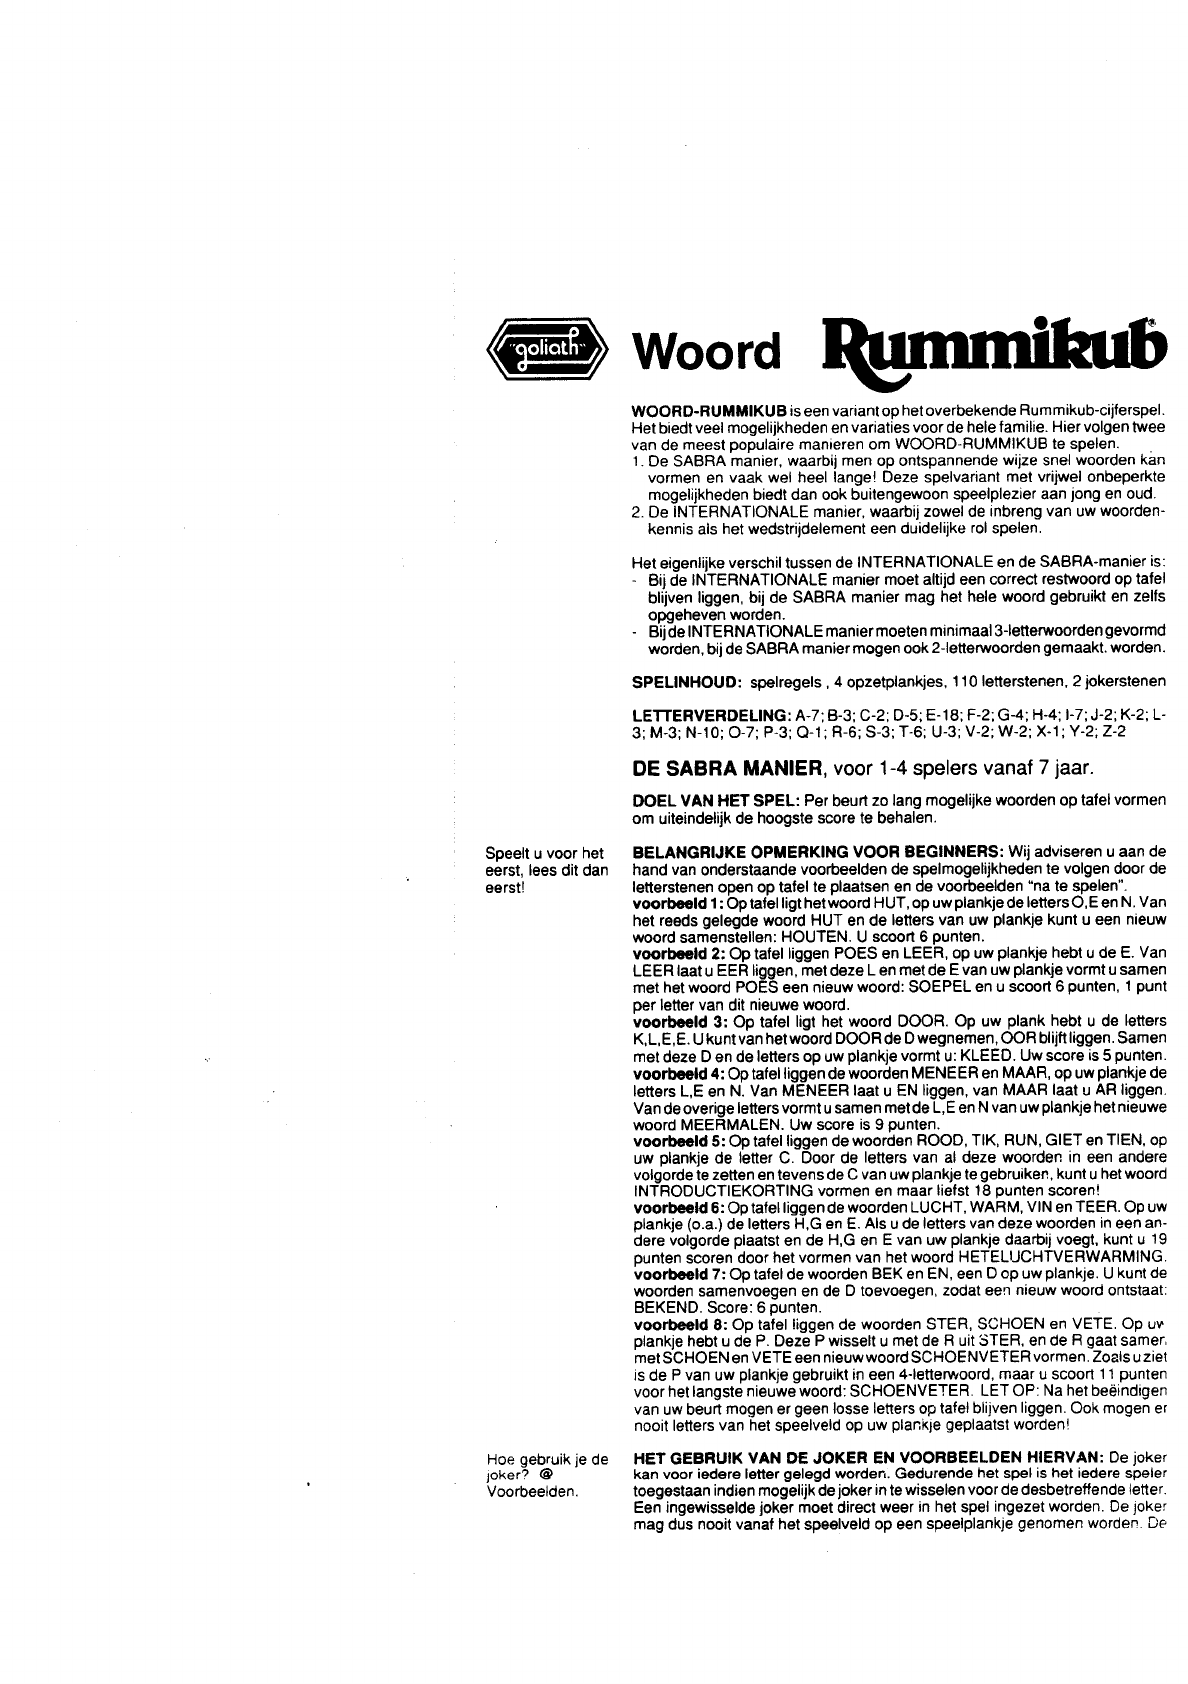 Overtuiging Dragende cirkel Astrolabium Handleiding Jumbo Rummikub Woord (pagina 1 van 6) (Nederlands)